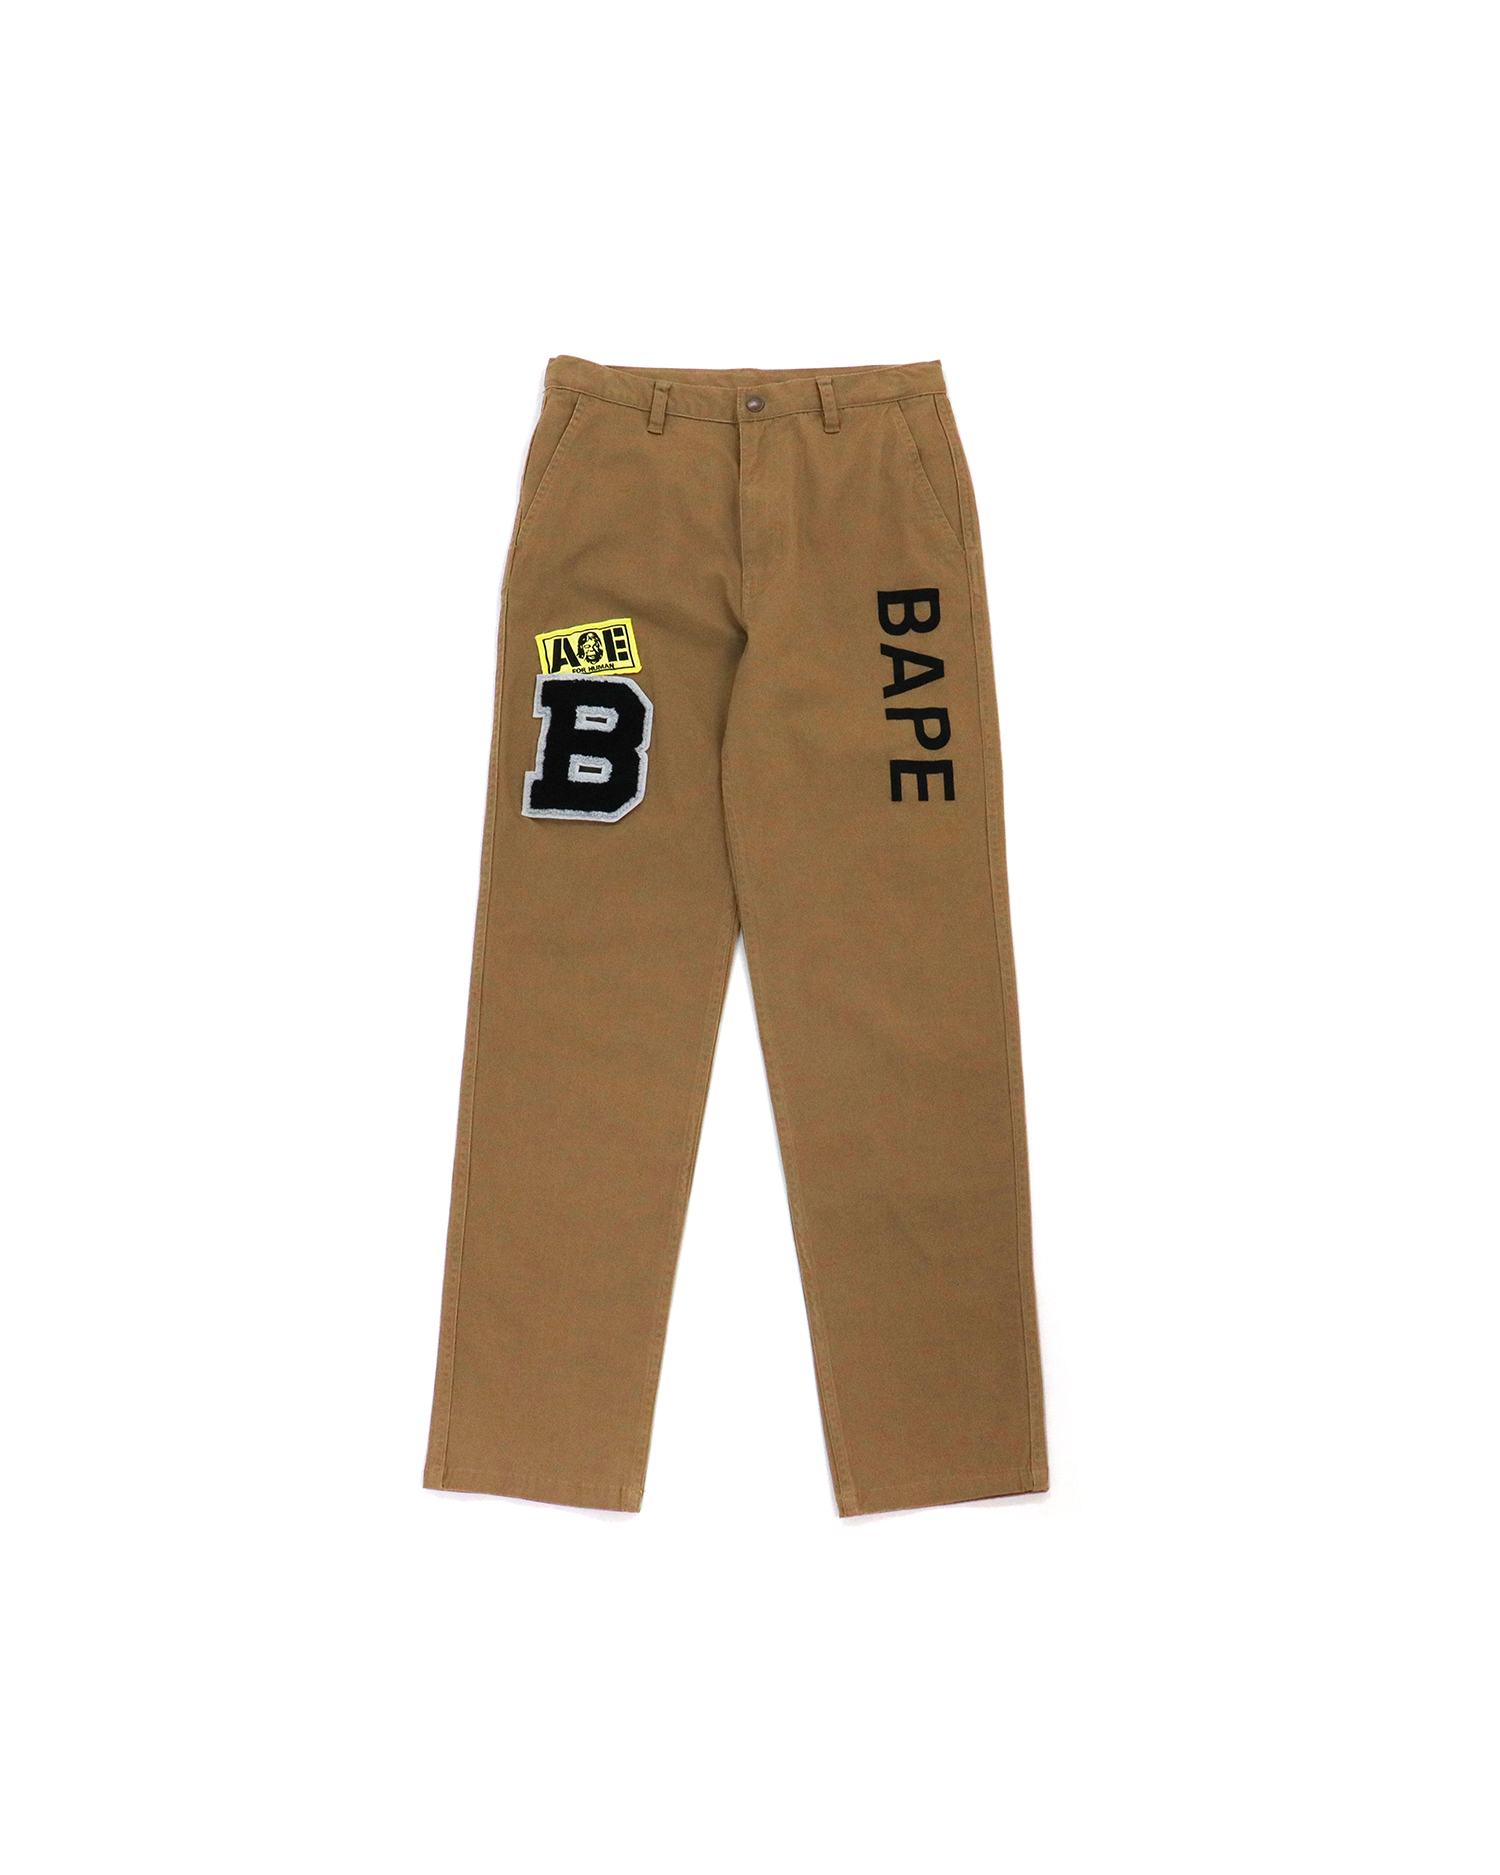 Shop Patched Chino pants Online | BAPE